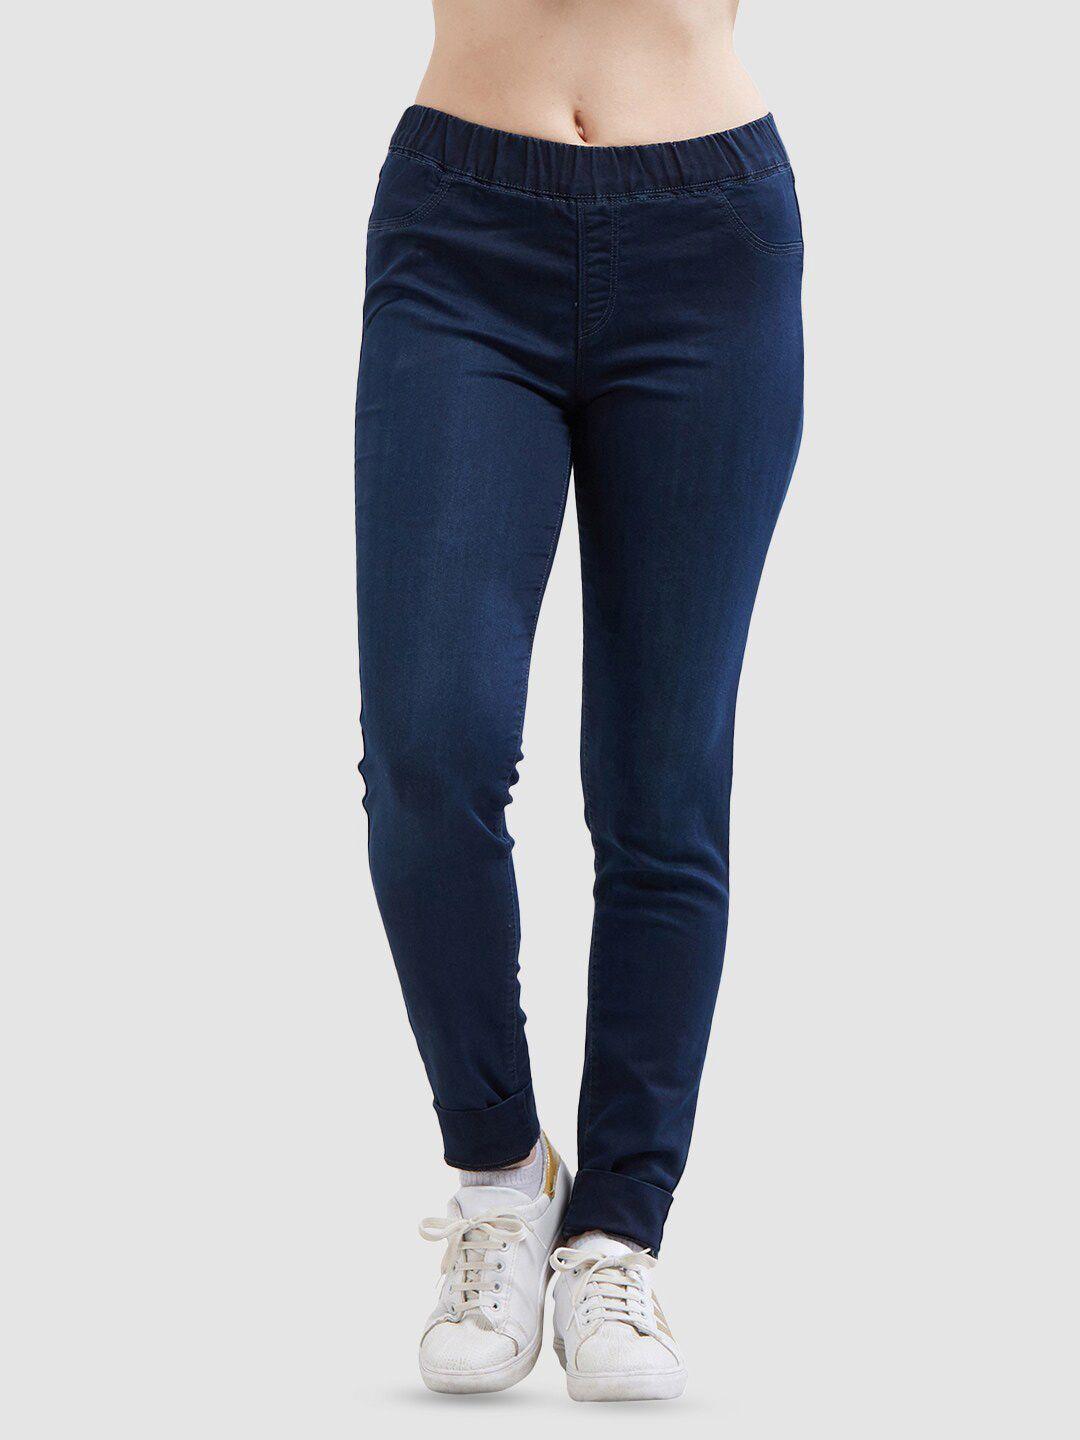 kraus jeans women skinny fit jeggings